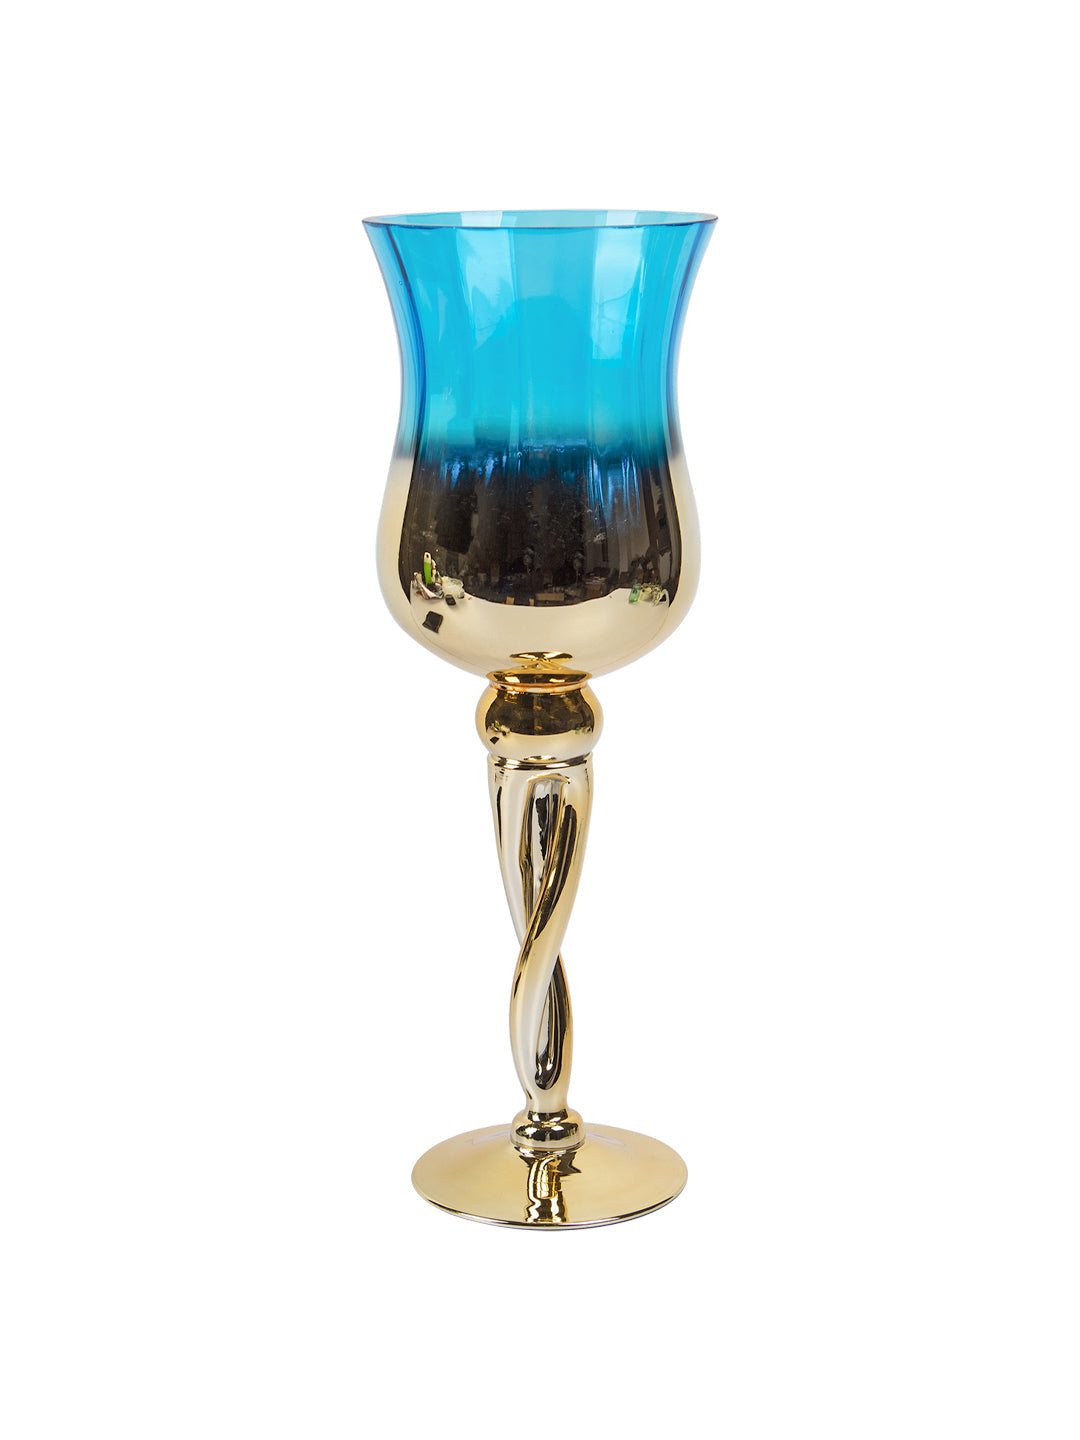 VON CASA Decorative Skyblue Tined Glass Tealight Candlestick Holder